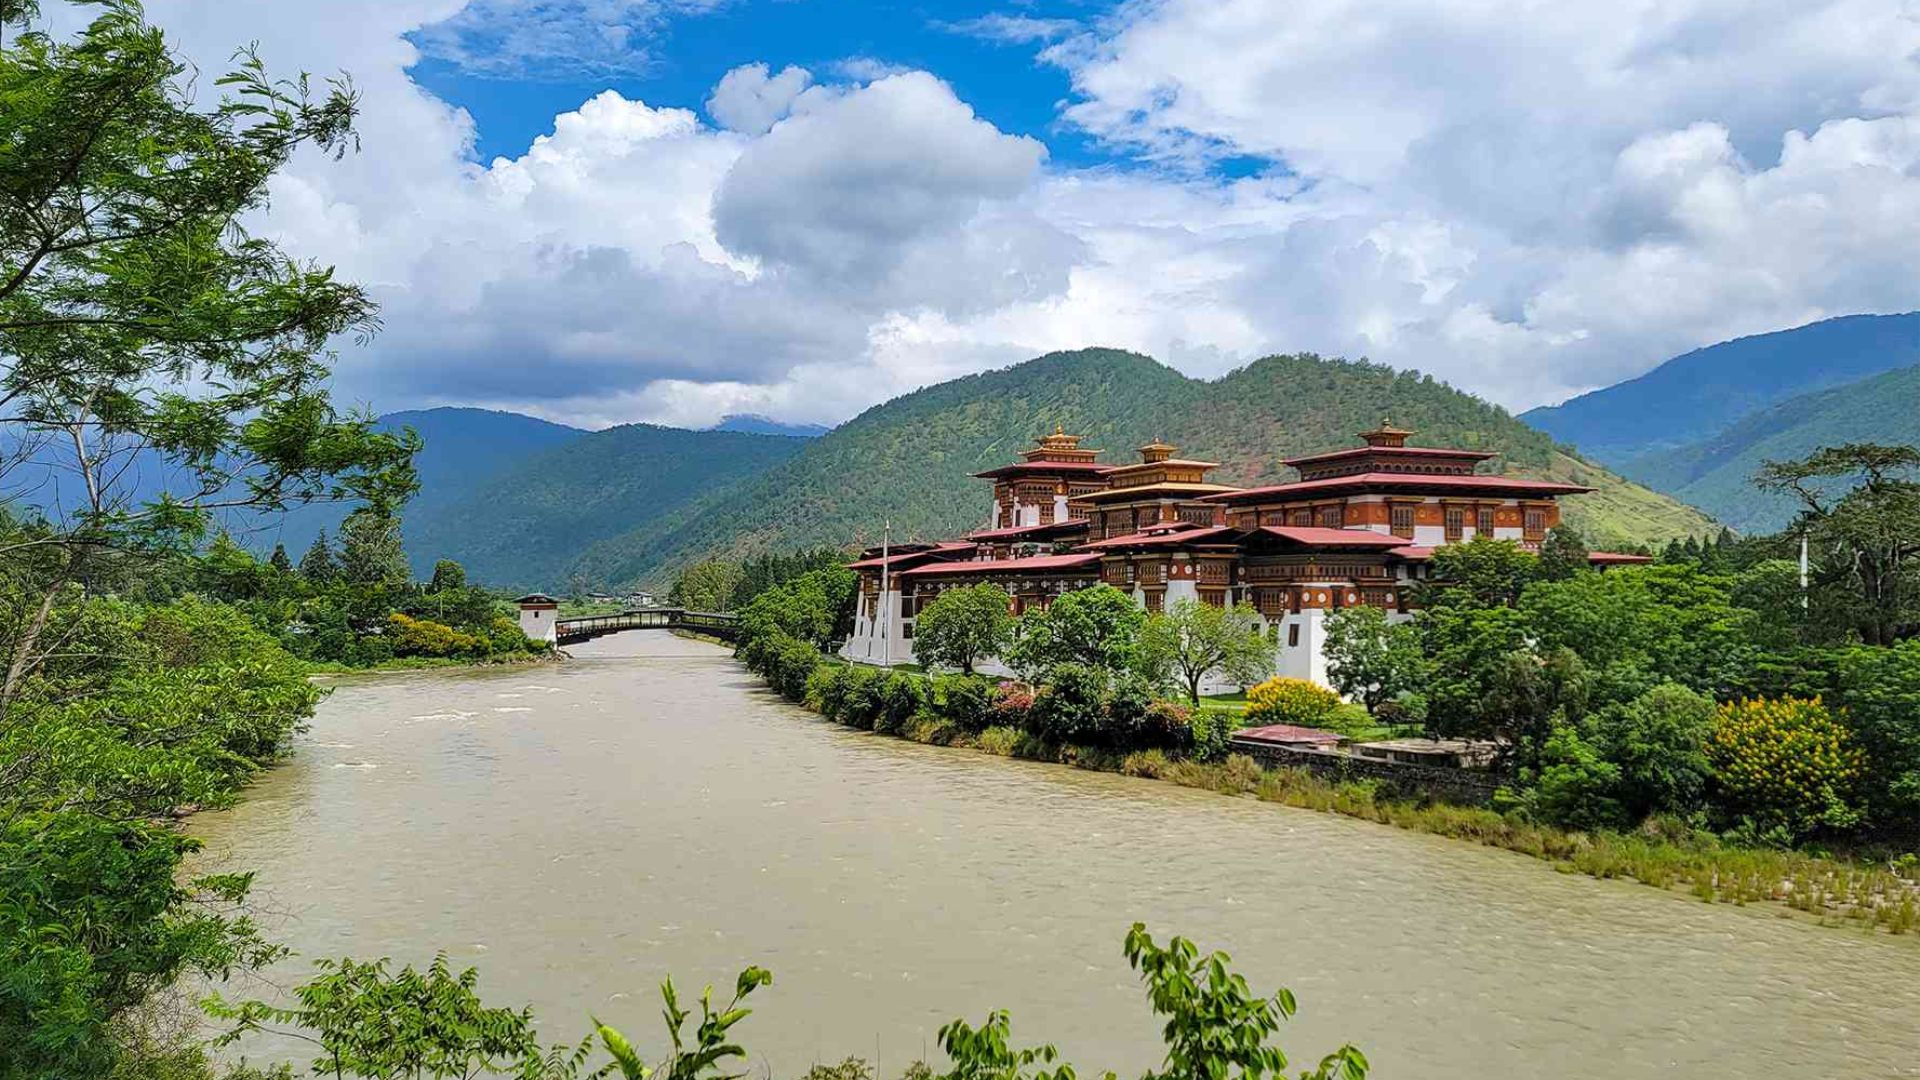 bhutan tourism rules